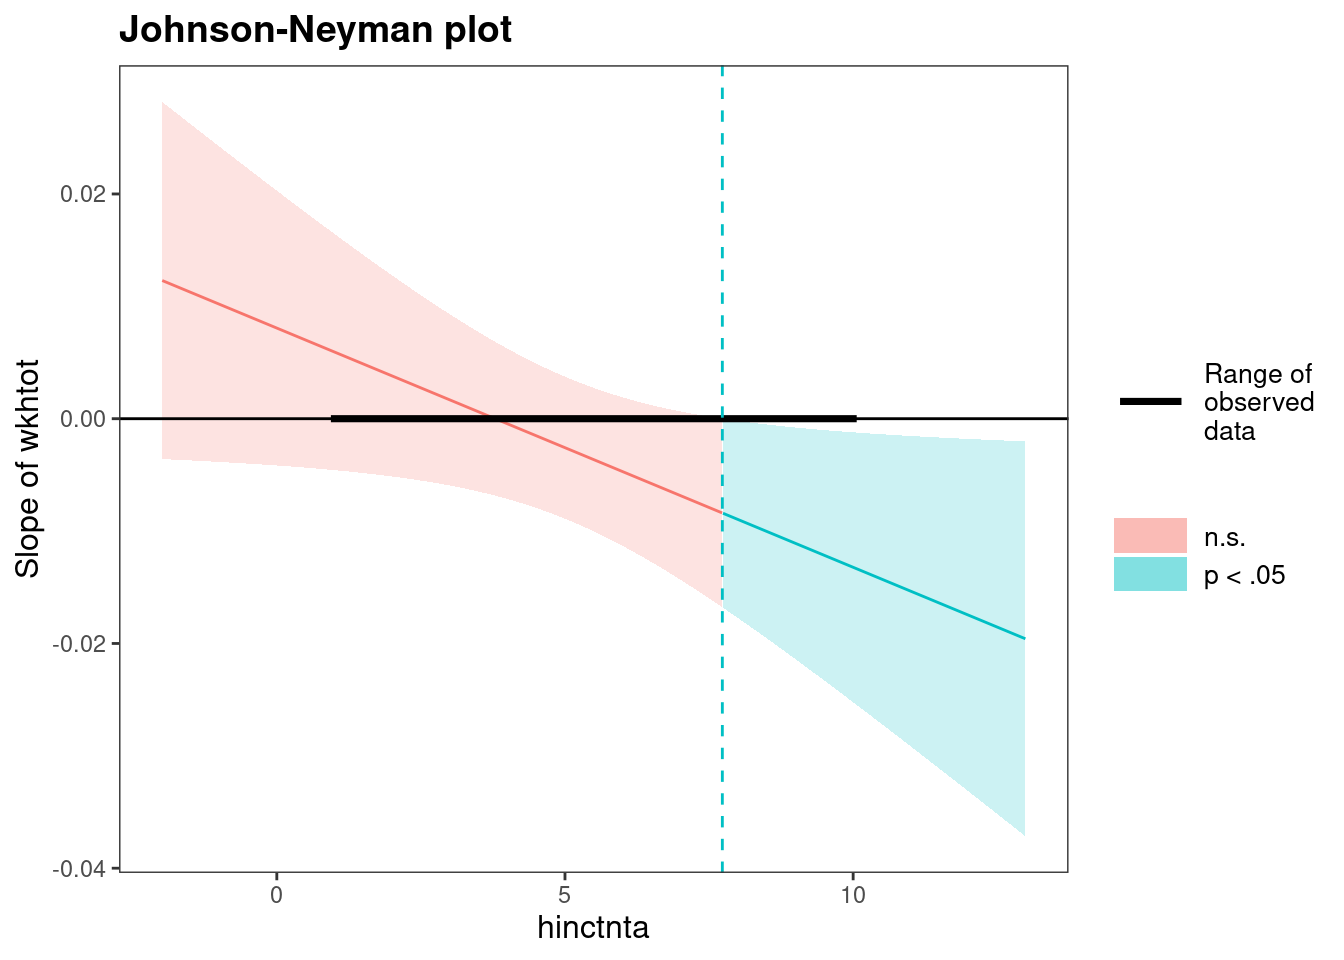 Johnson-Neyman plot shows regions of significance